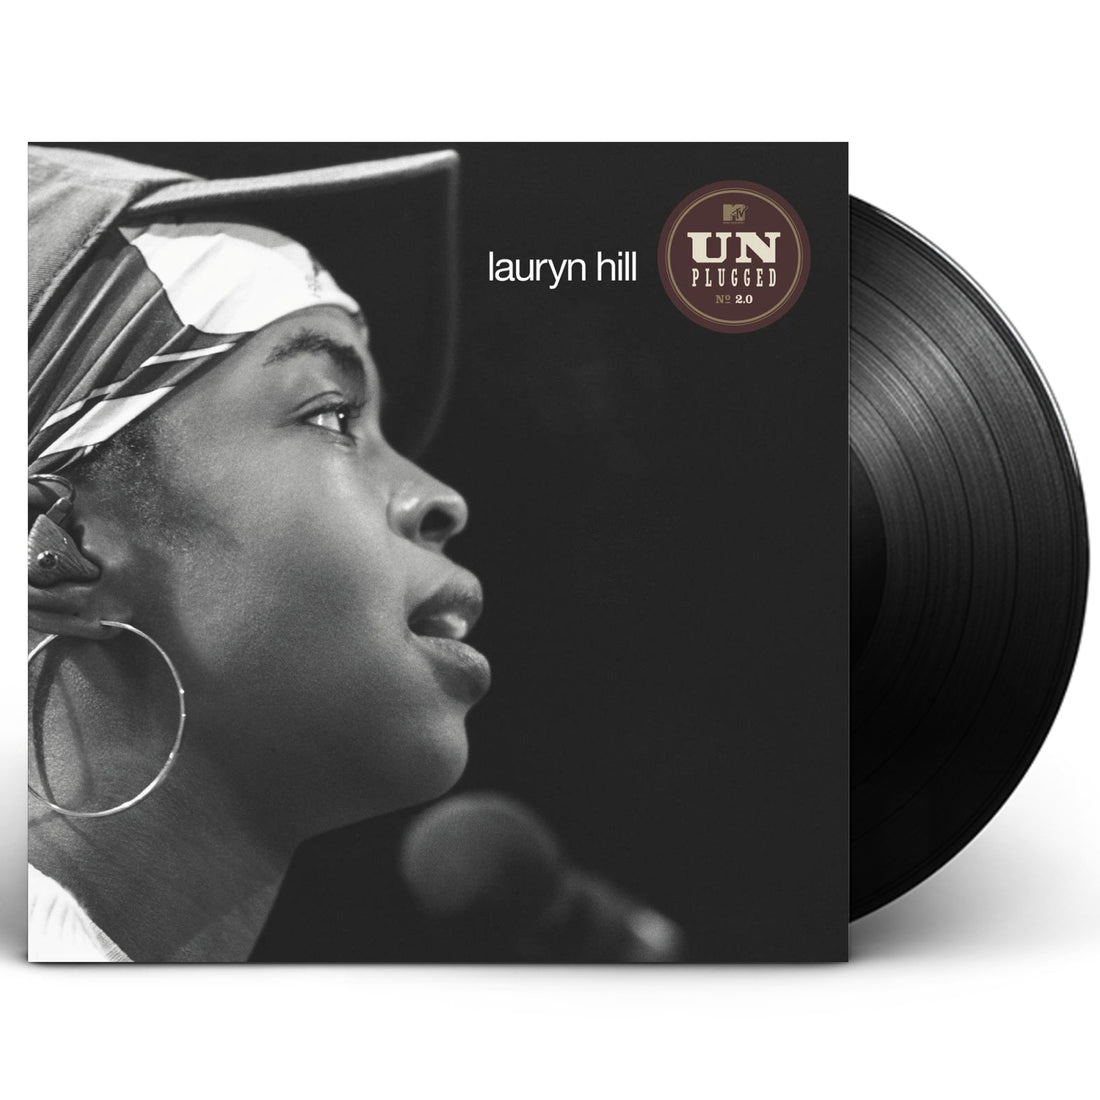 Lauryn Hill "MTV Unplugged No. 2.0" 2xLP Vinyl